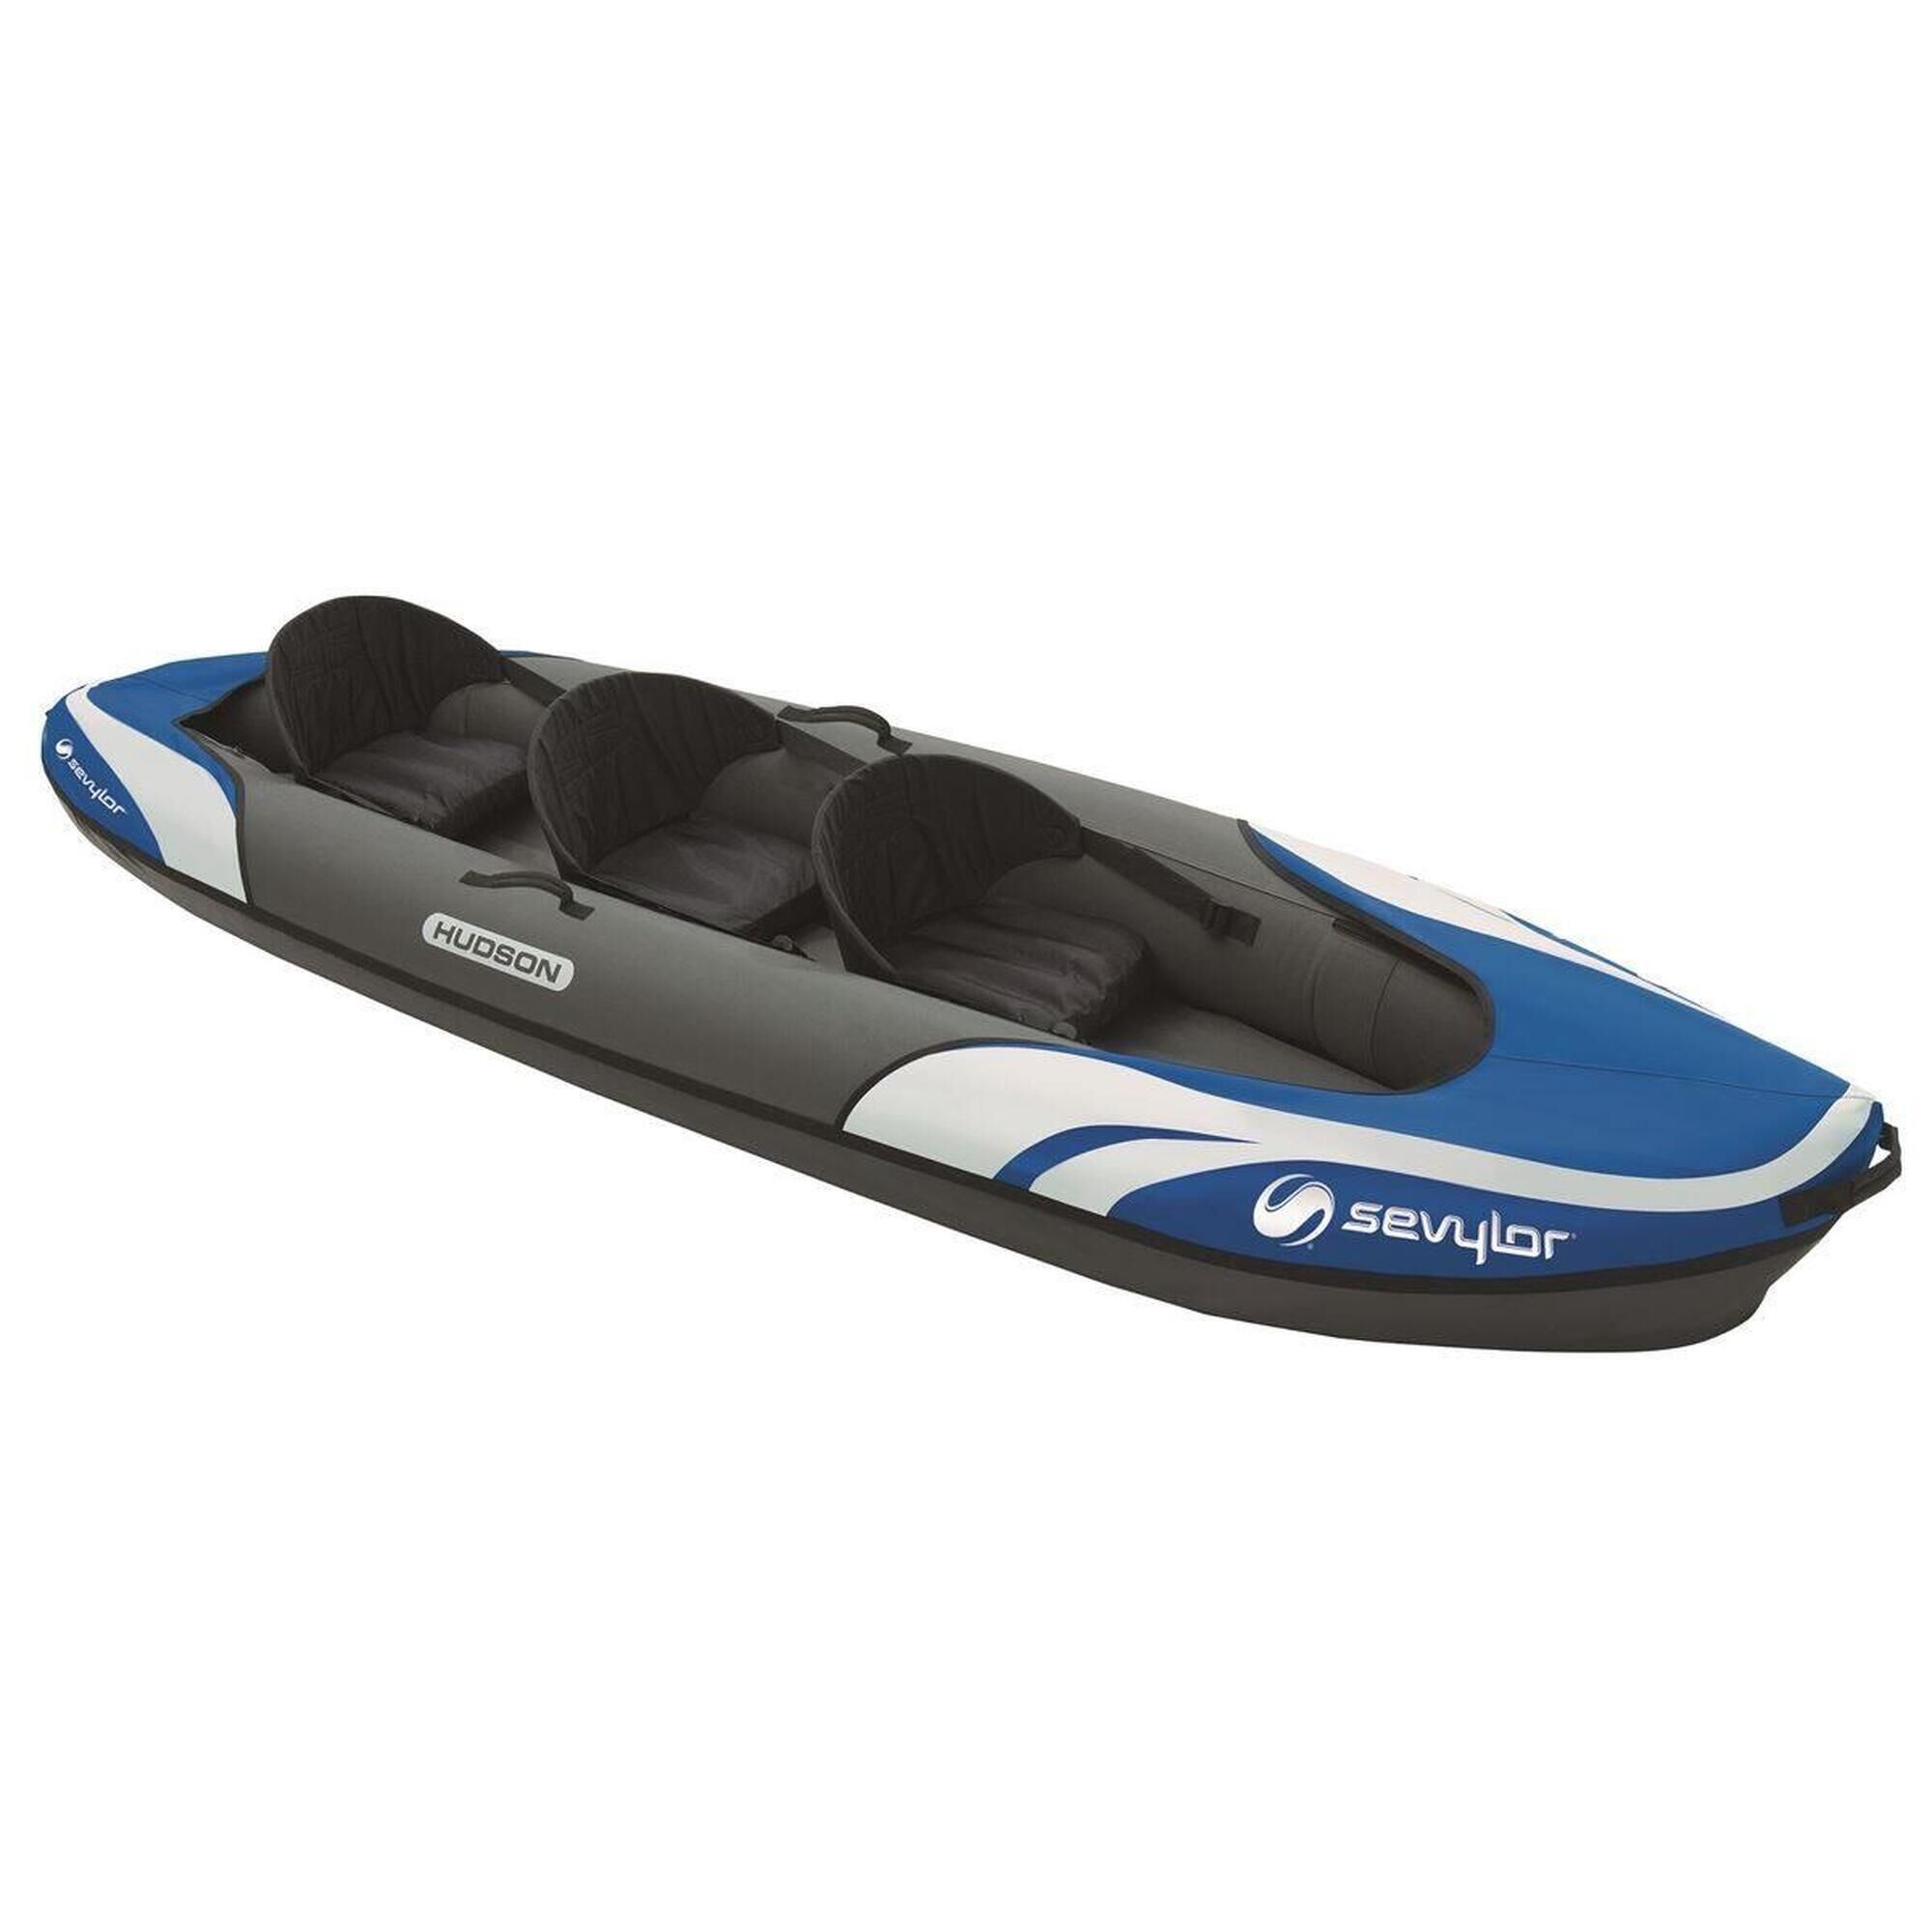 SEVYLOR Hudson 3 Person Inflatable Touring Kayak - Blue